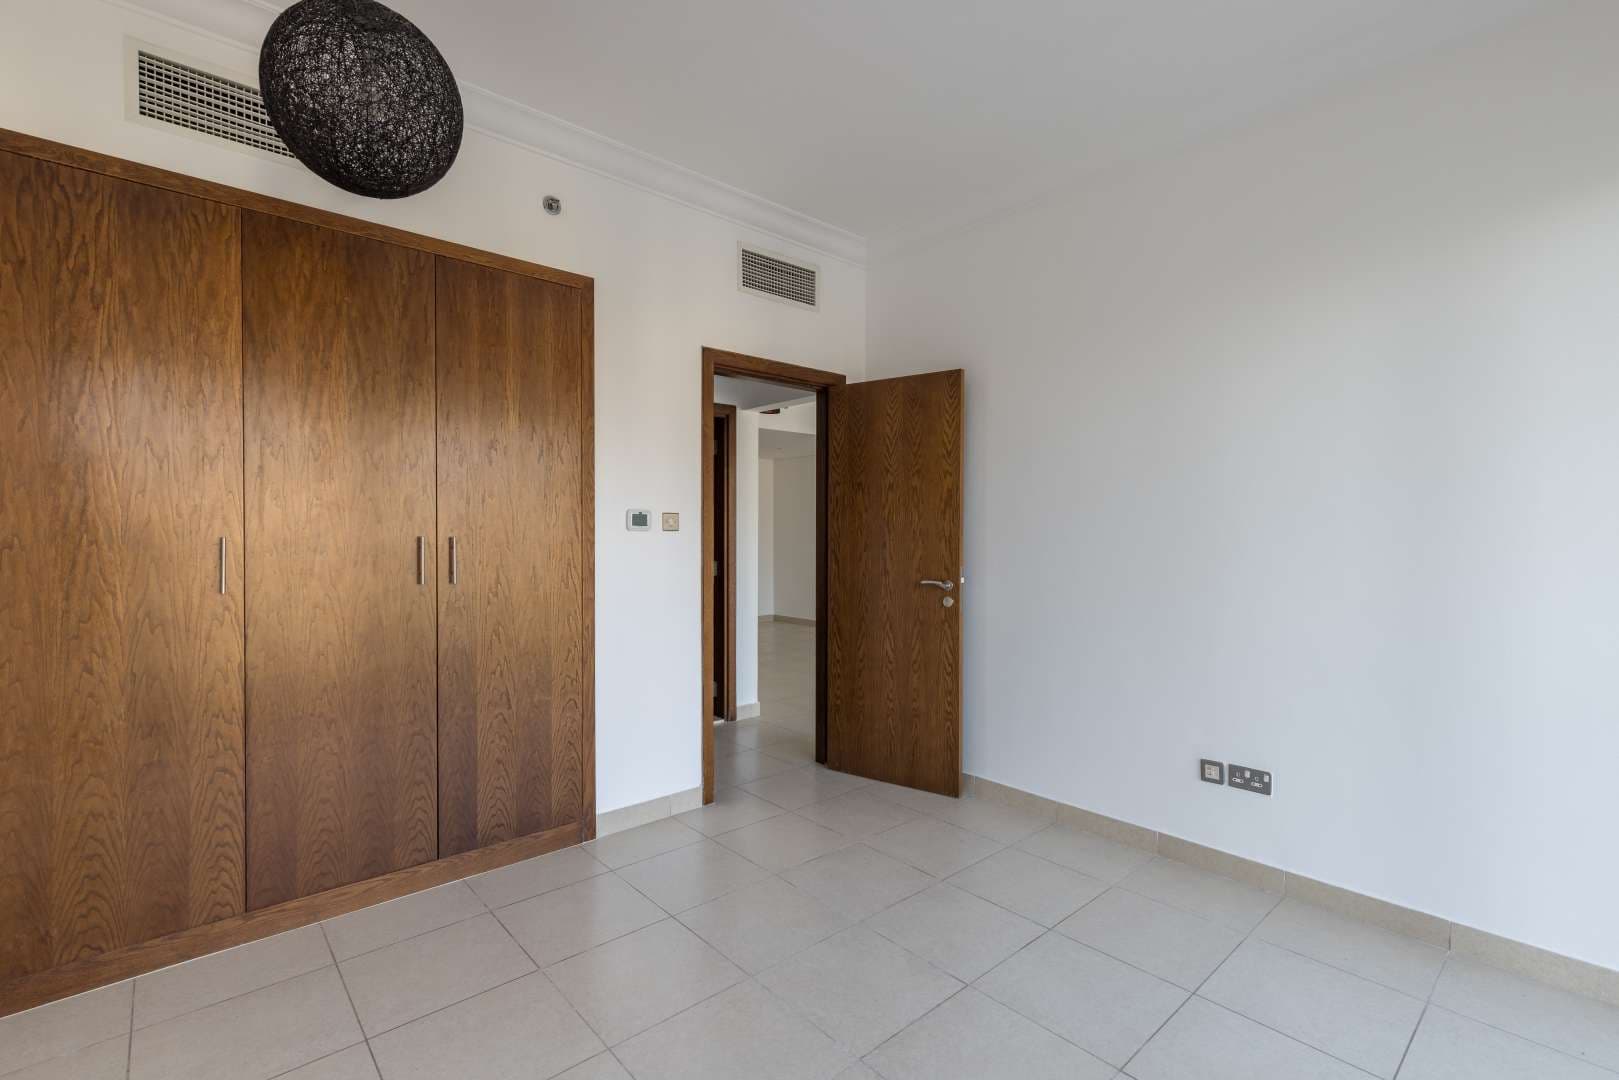 1 Bedroom Apartment For Sale Mohammad Bin Rashid Boulevard Lp10919 2973b39ddde43600.jpg